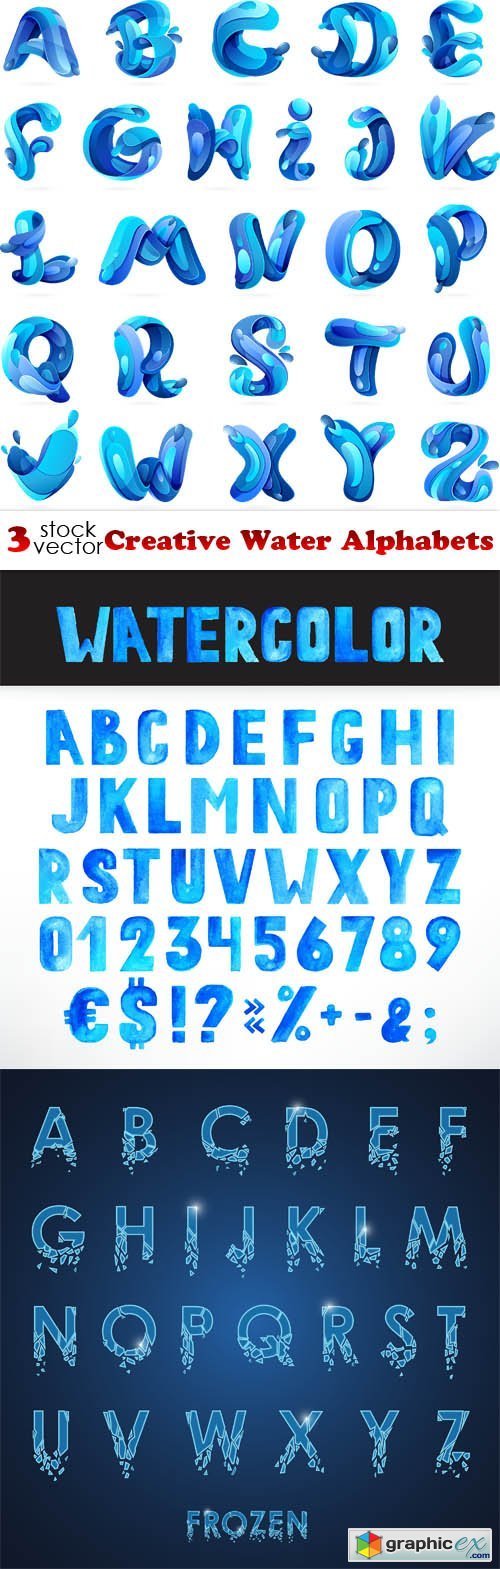 Vectors - Creative Water Alphabets